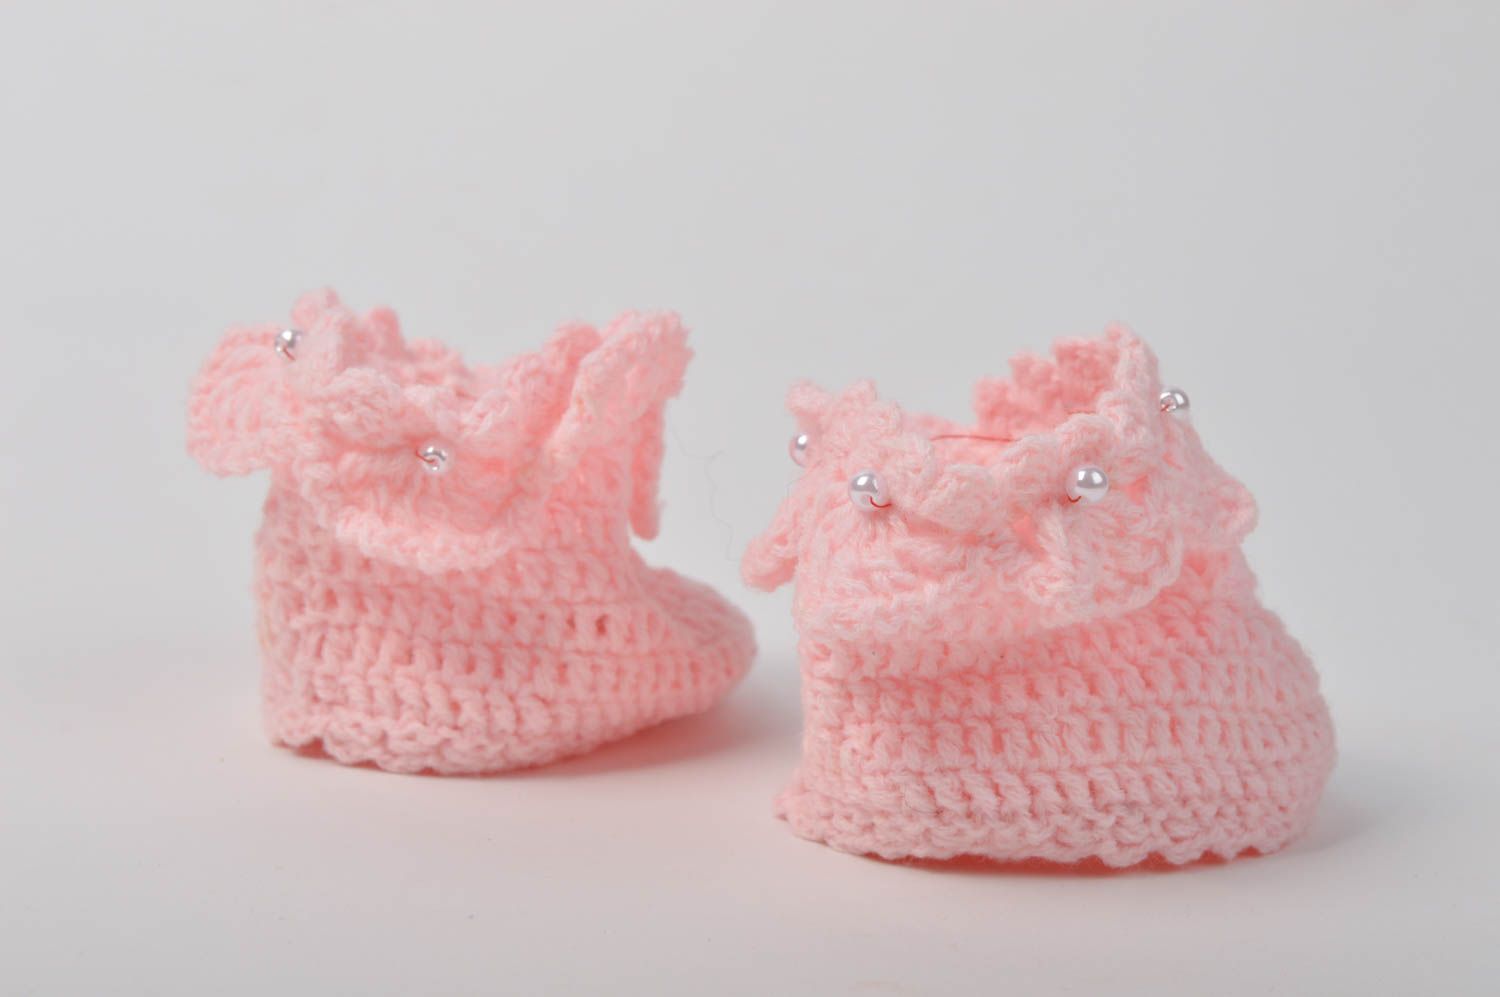 Crocheted booties for babies knitted socks crochet booties handmade booties photo 4